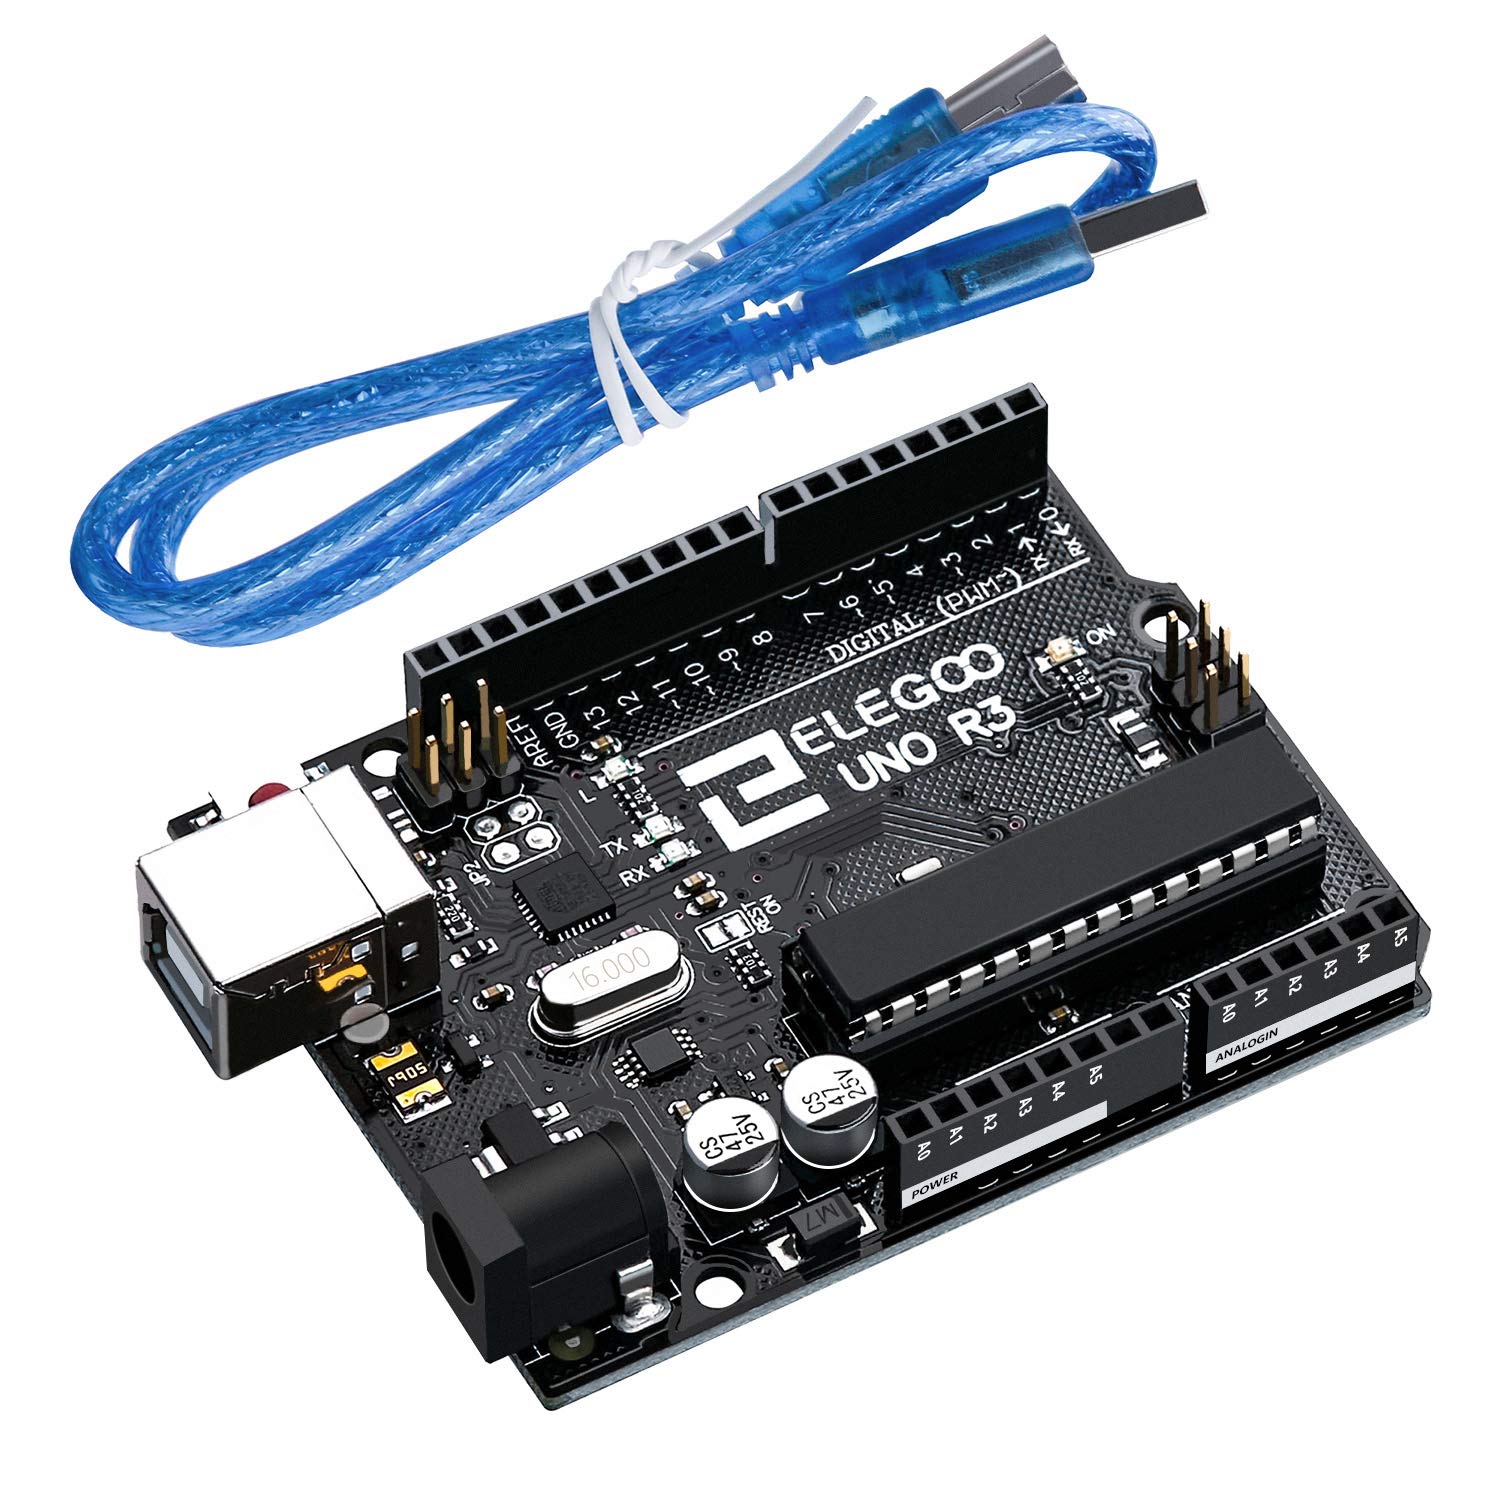 ELEGOO UNO R3 Board ATmega328P ATMEGA16U2 with USB Cable Compatible with Arduino IDE Projects, RoHS Compliant